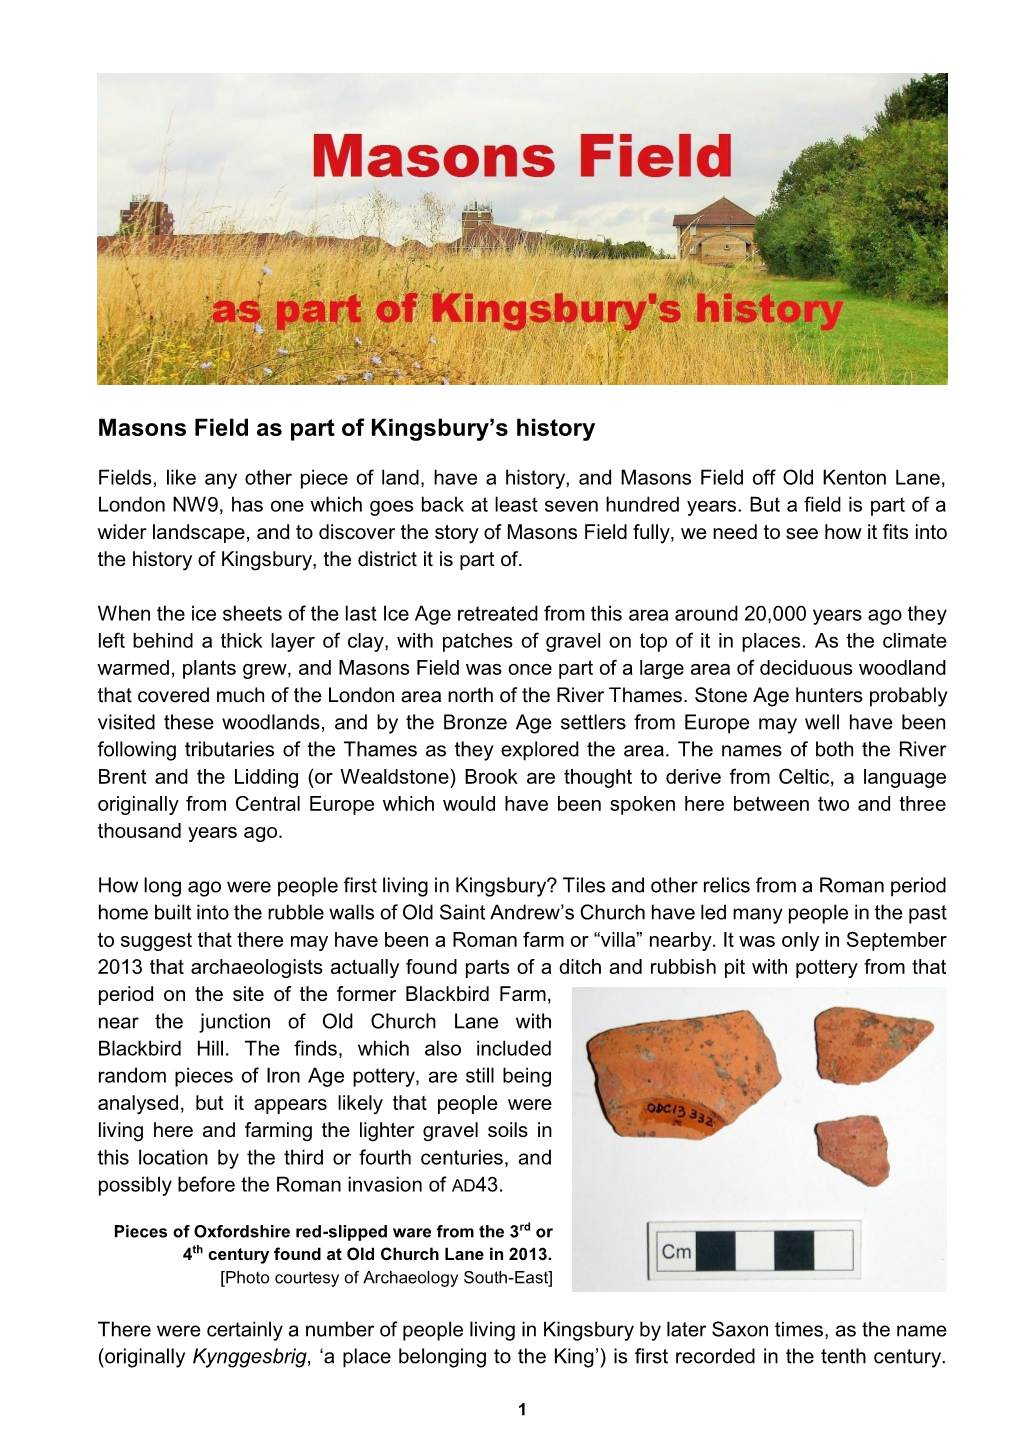 Masons Field As Part of Kingsbury's History